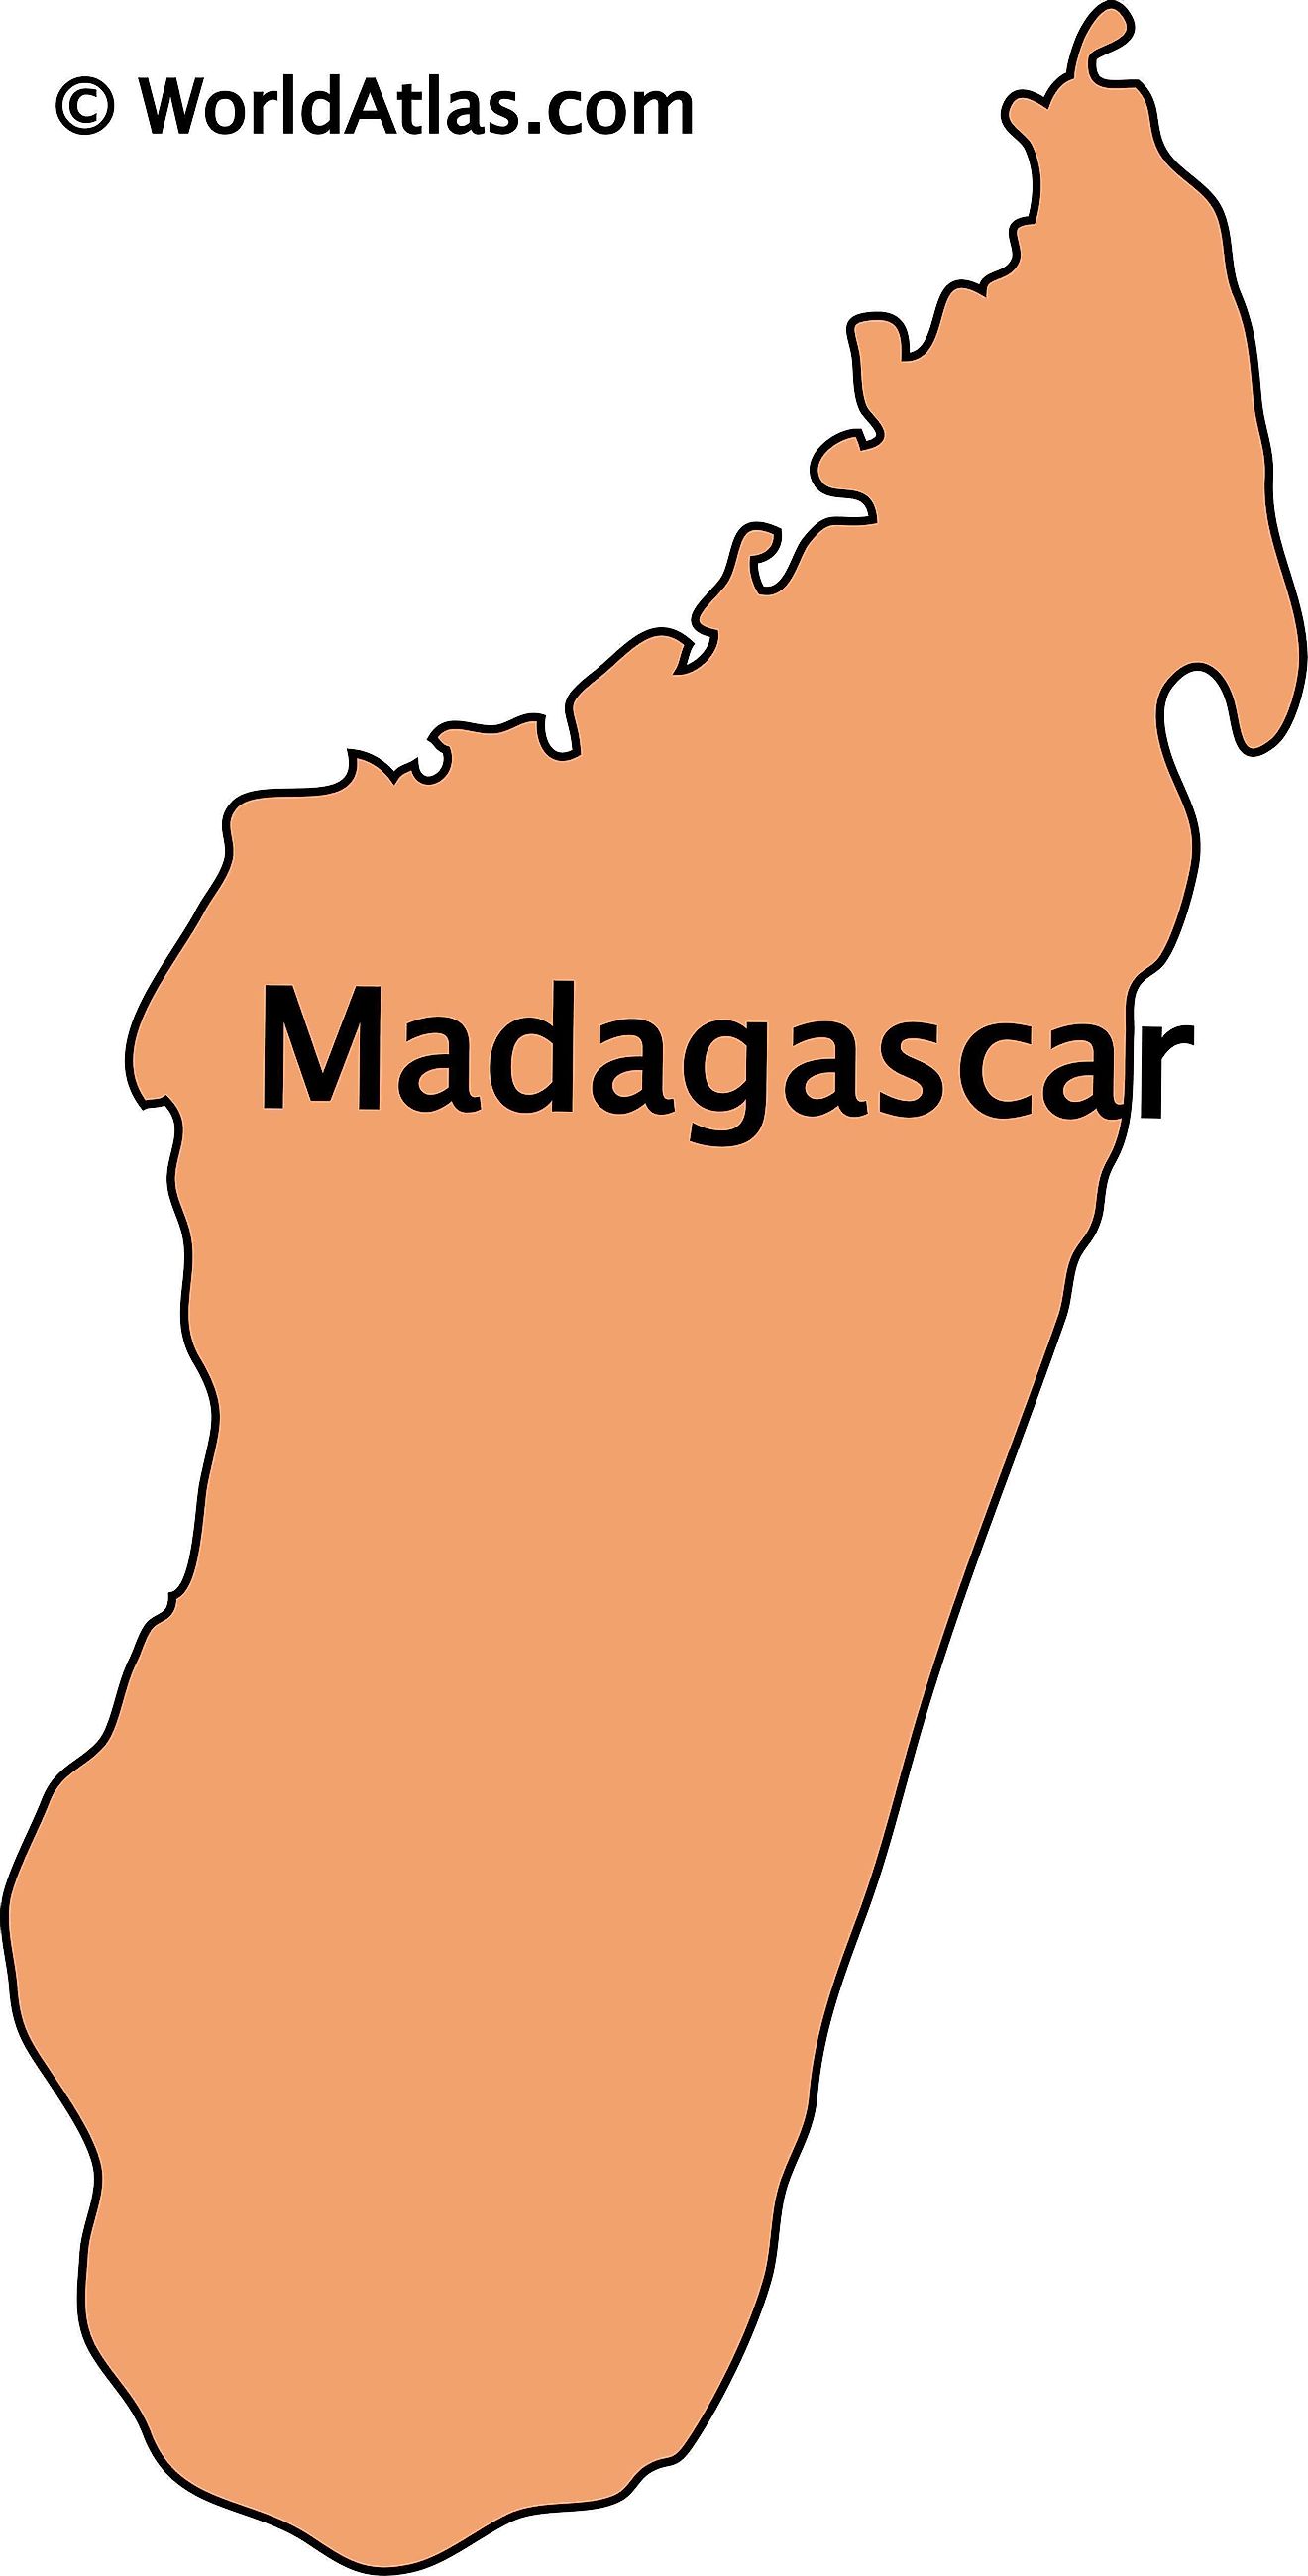 Madagascar Maps Facts World Atlas